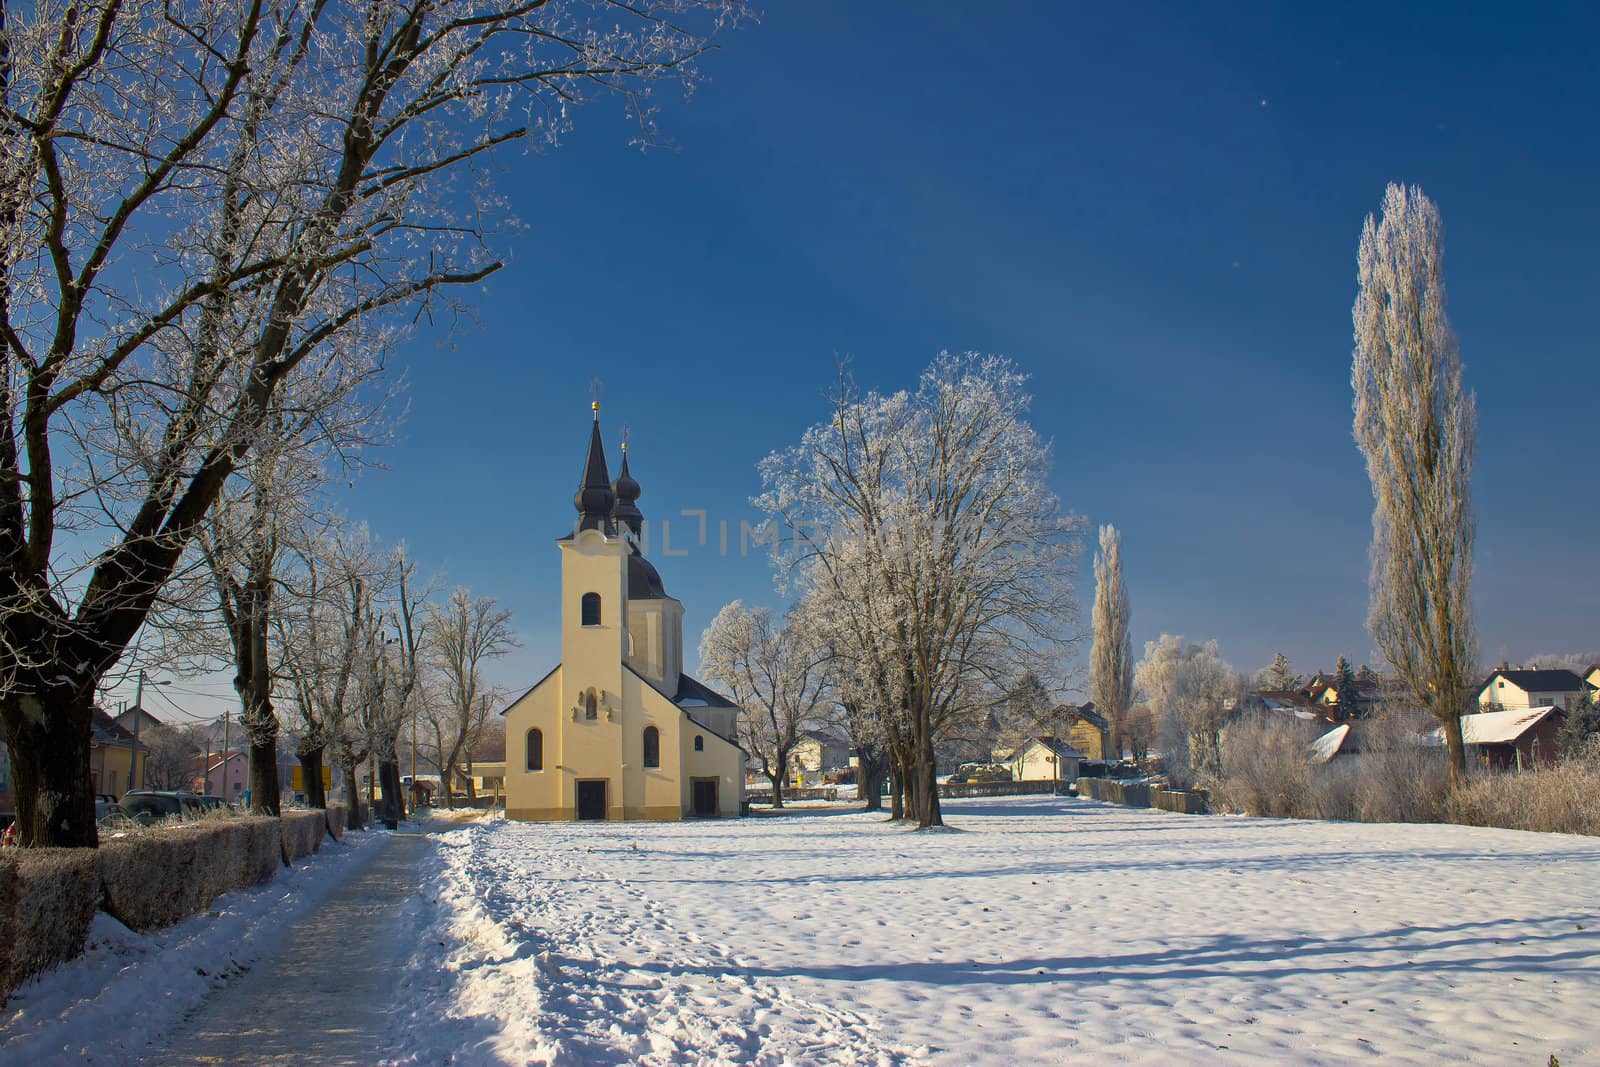 Idyllic winter - Church in snow by xbrchx